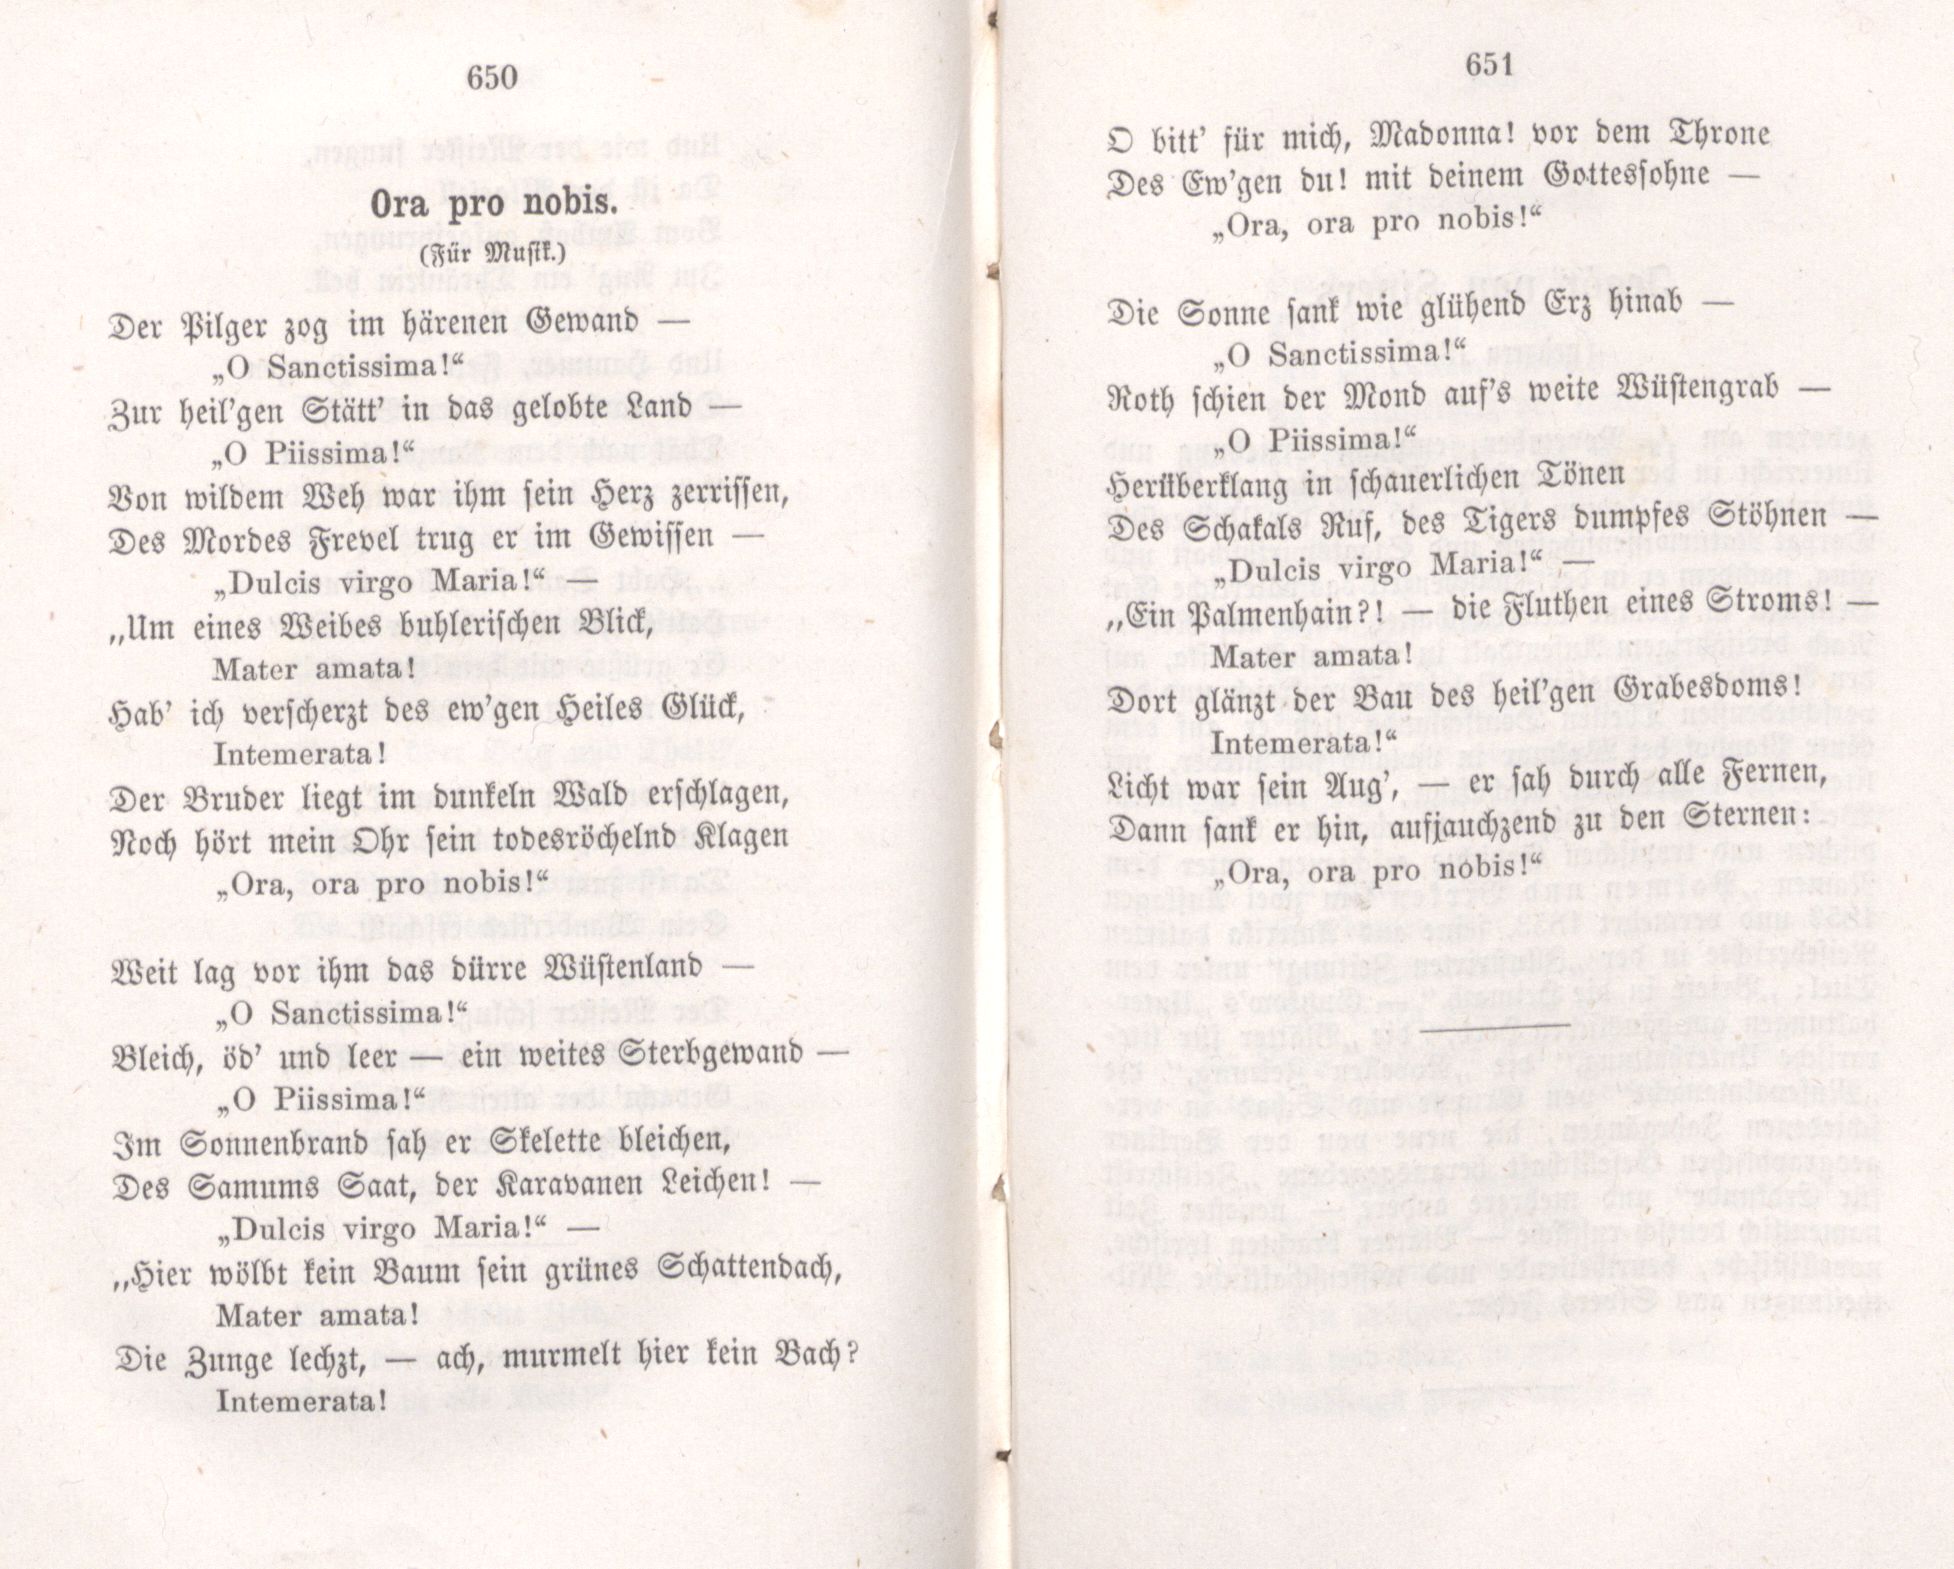 Ora pro nobis (1855) | 1. (650-651) Main body of text